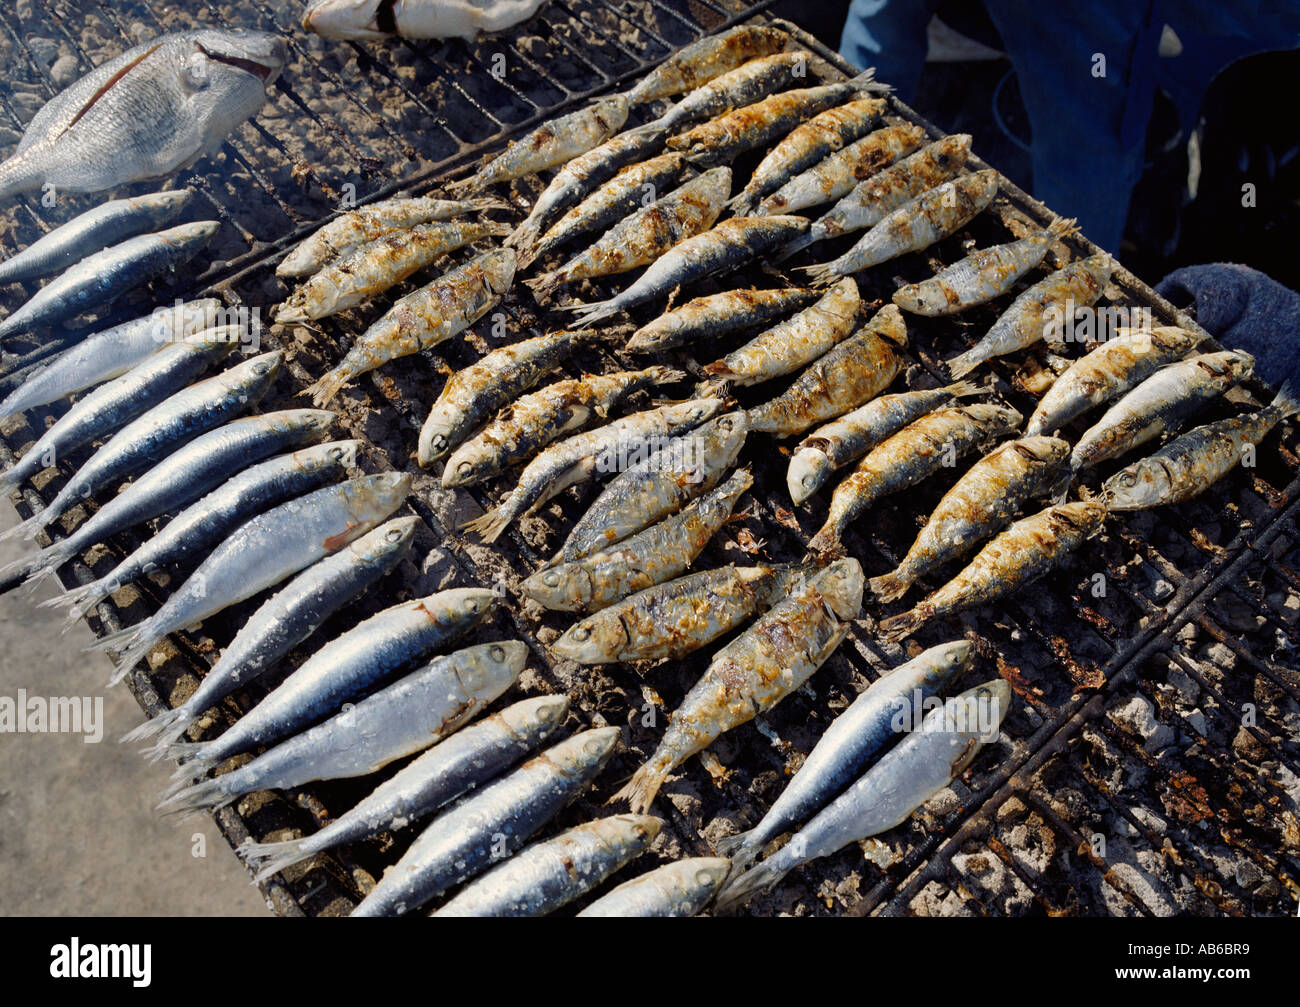 Portugal, the Algarve, Portimão, sardines on charcoal grill Stock Photo